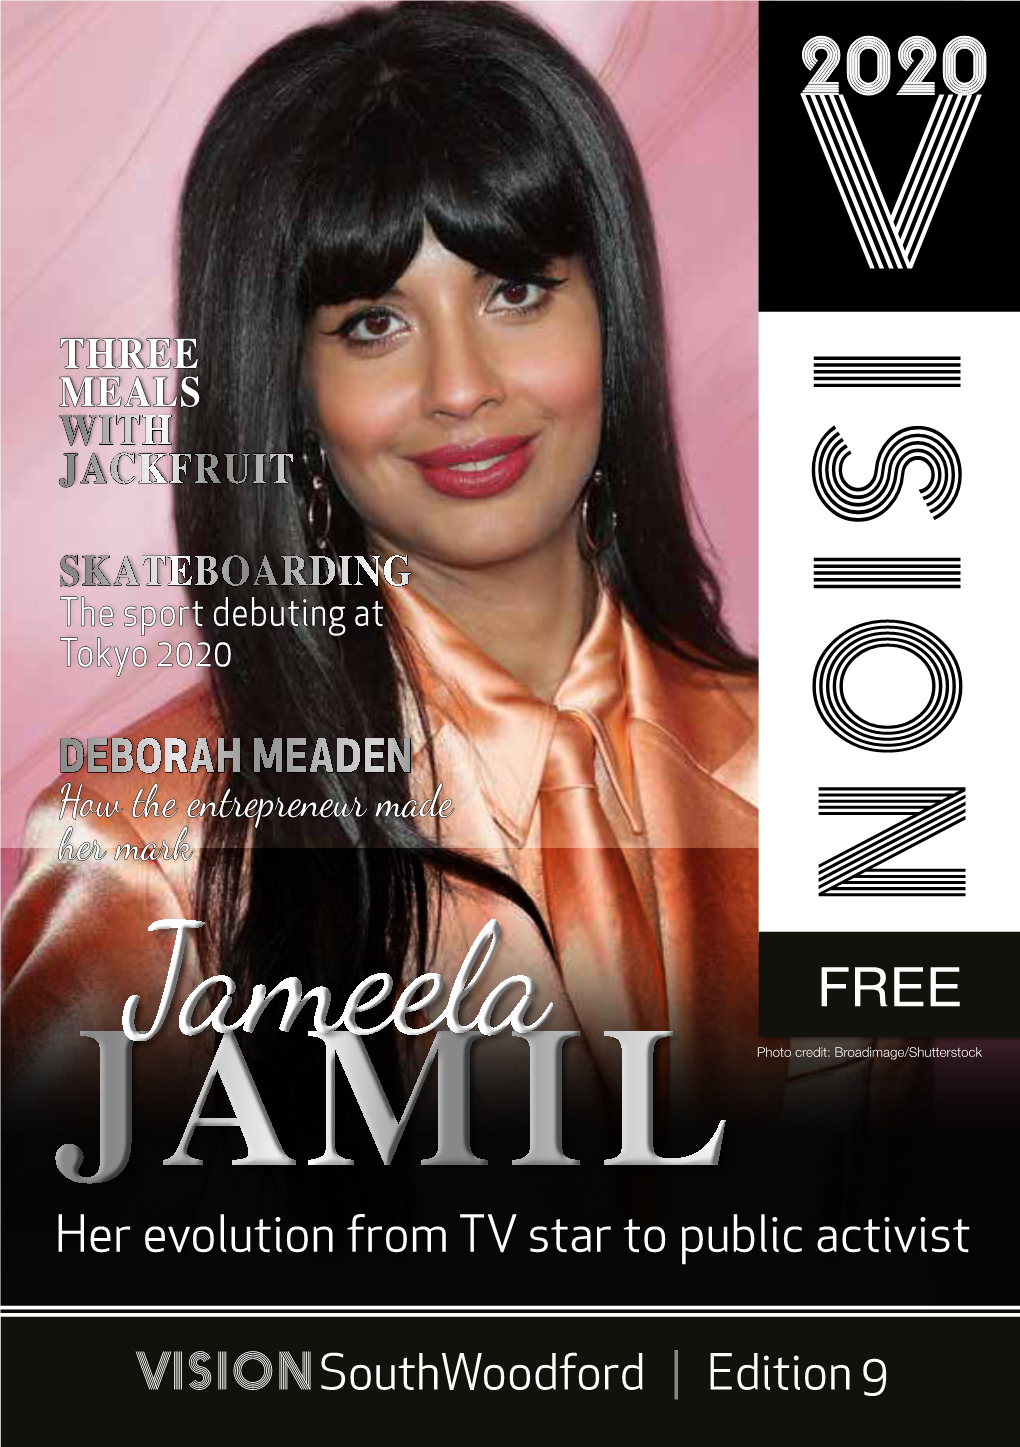 Jameela Photo Credit: Broadimage/Shutterstock JAMIL Her Evolution from TV Star to Public Activist